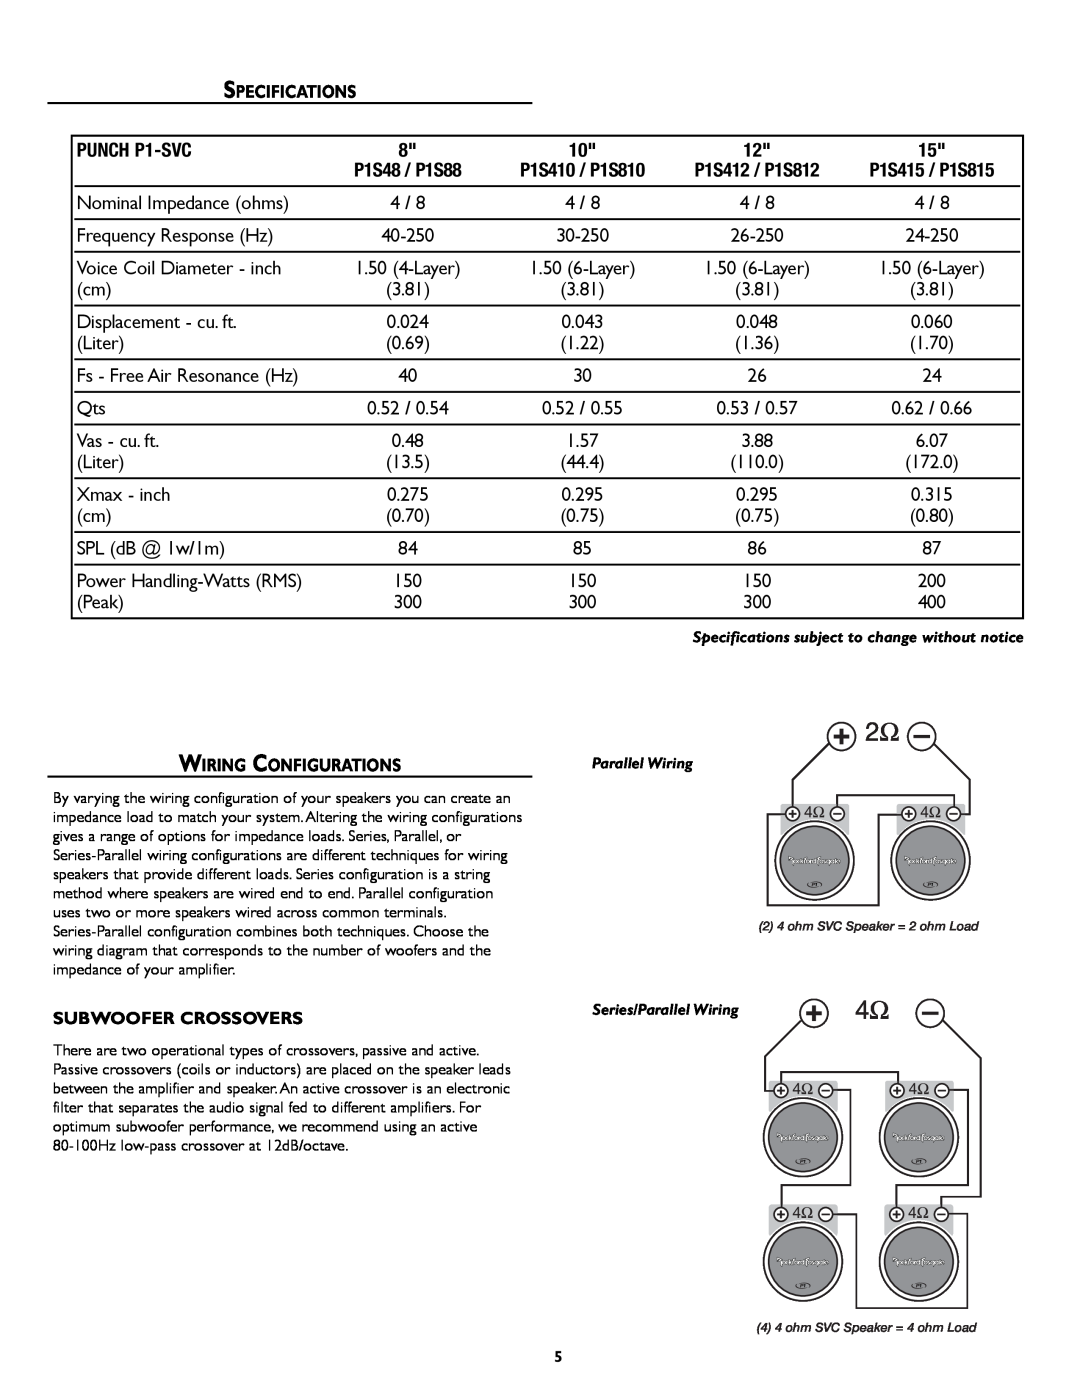 Rockford Fosgate P1S4/12, P1S815 warranty PUNCH P1-SVC, Nominal Impedance ohms 